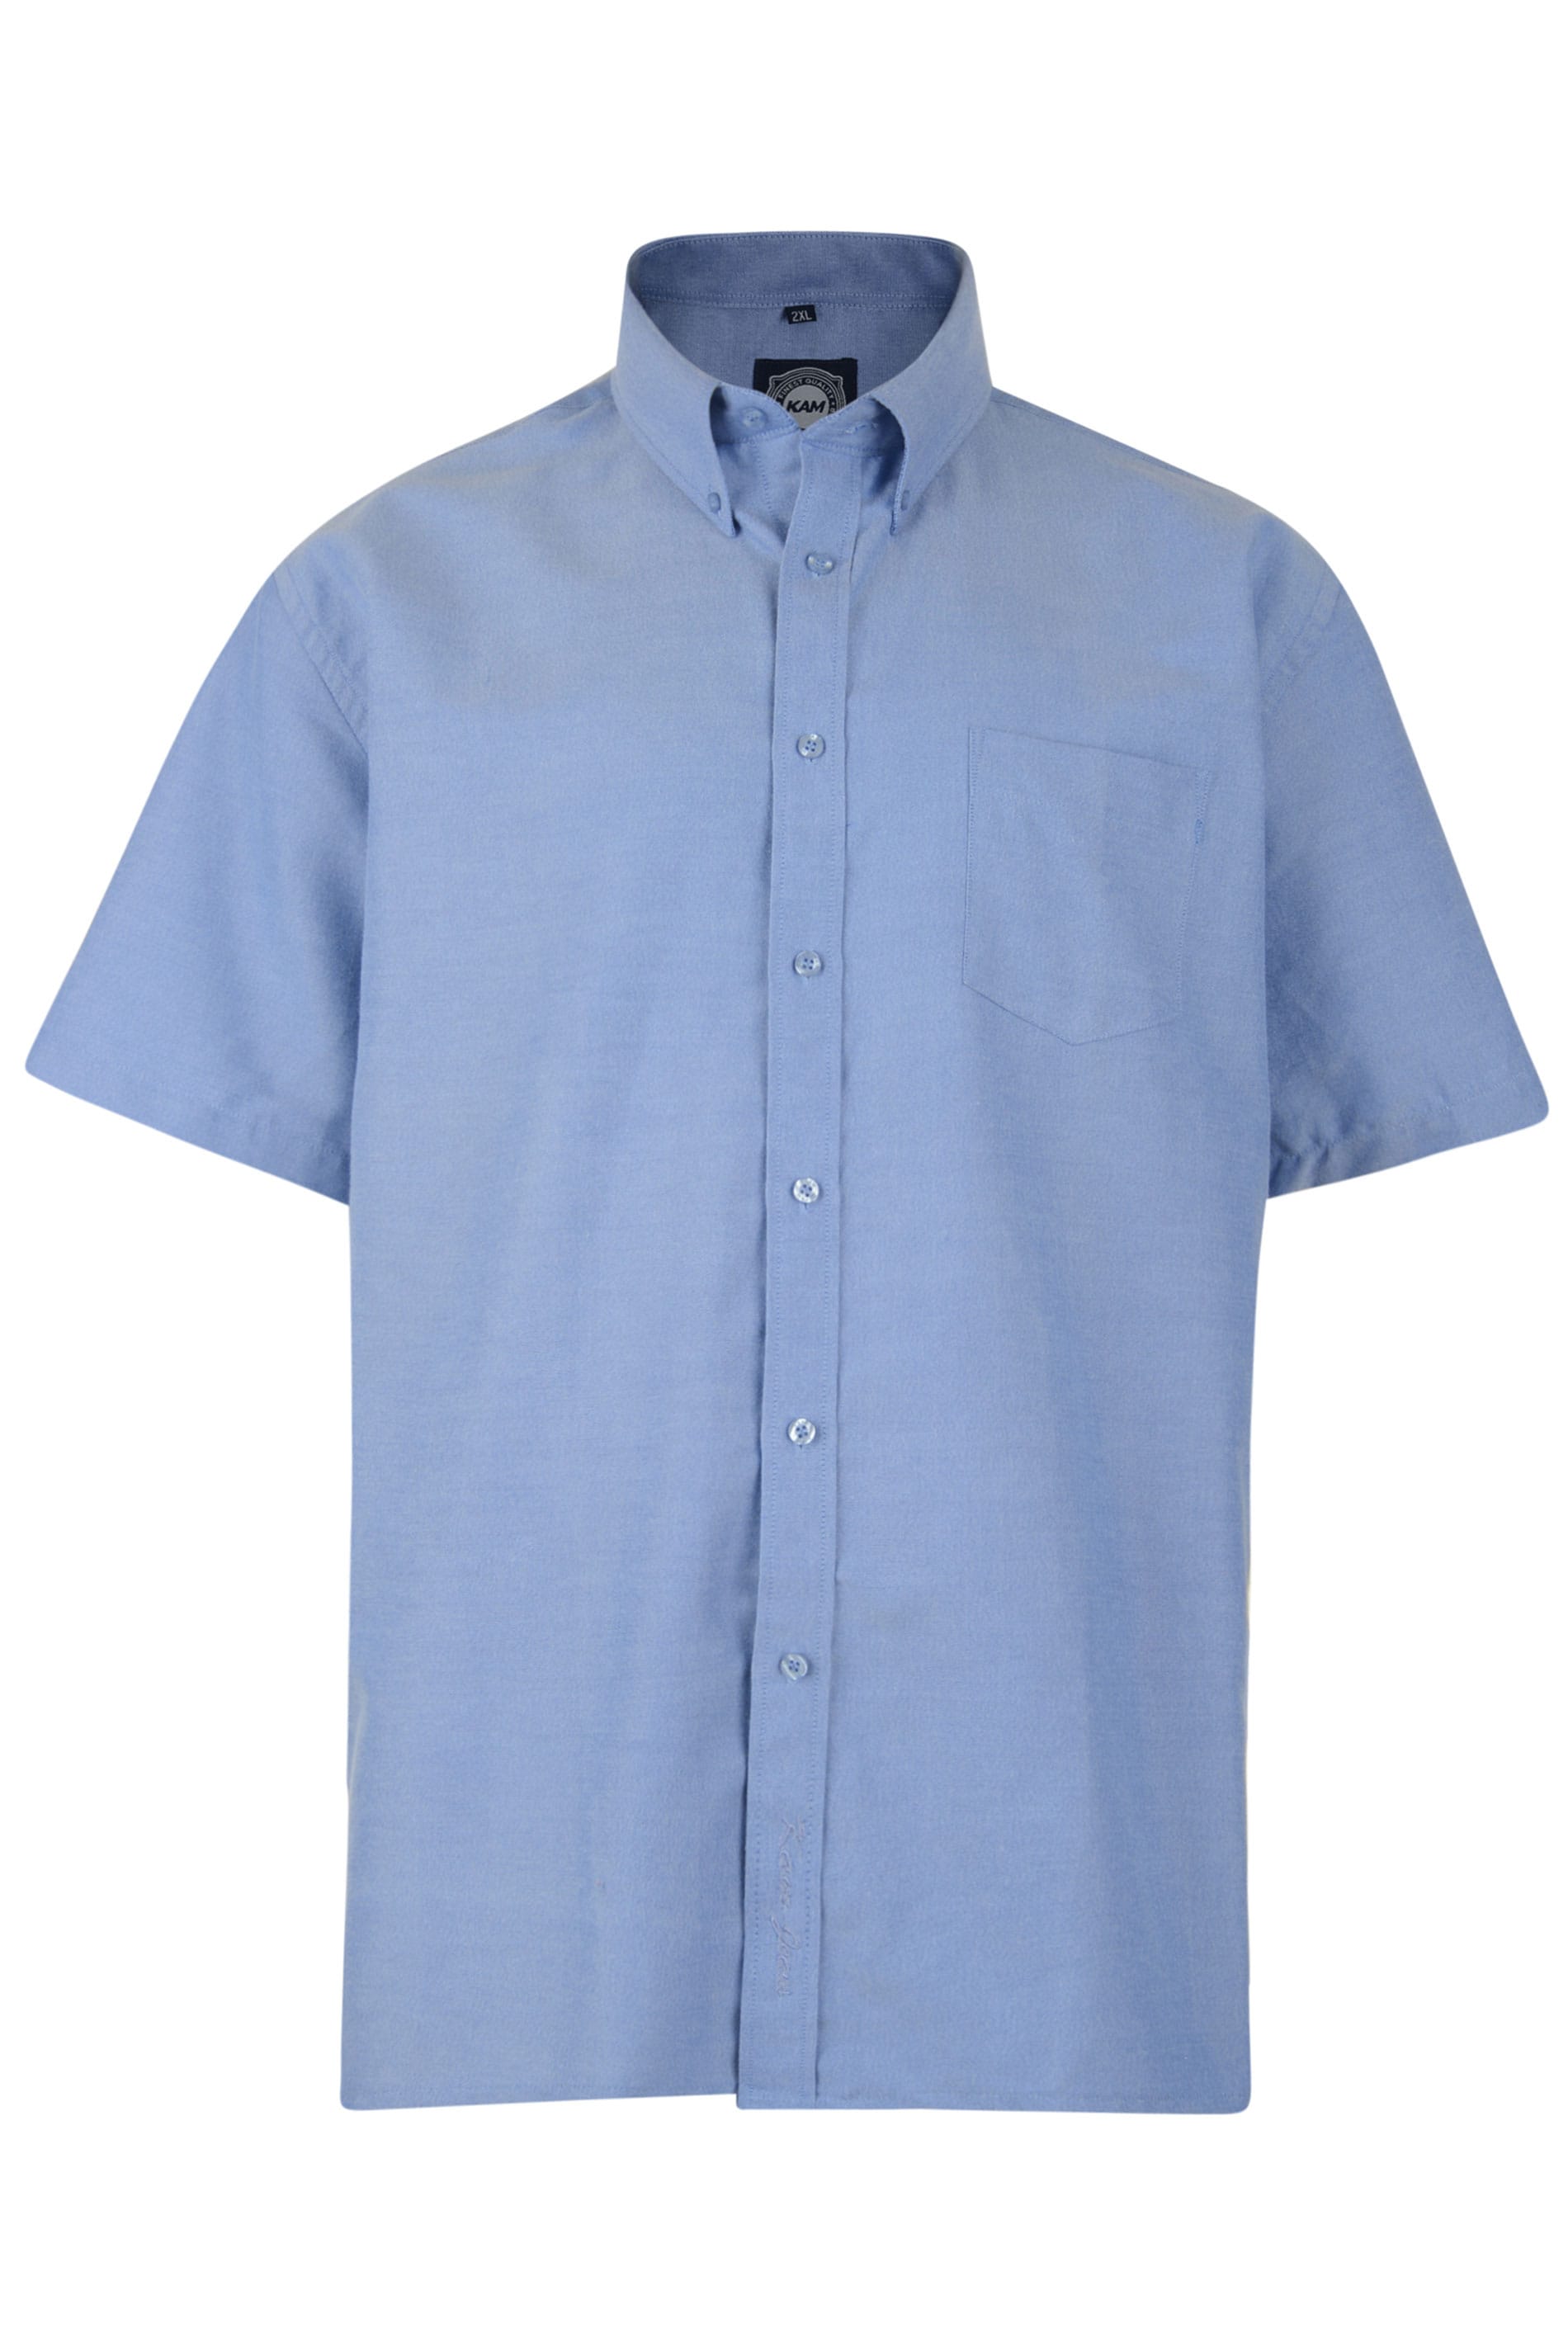 KAM Blue Oxford Short Sleeve Shirt | BadRhino